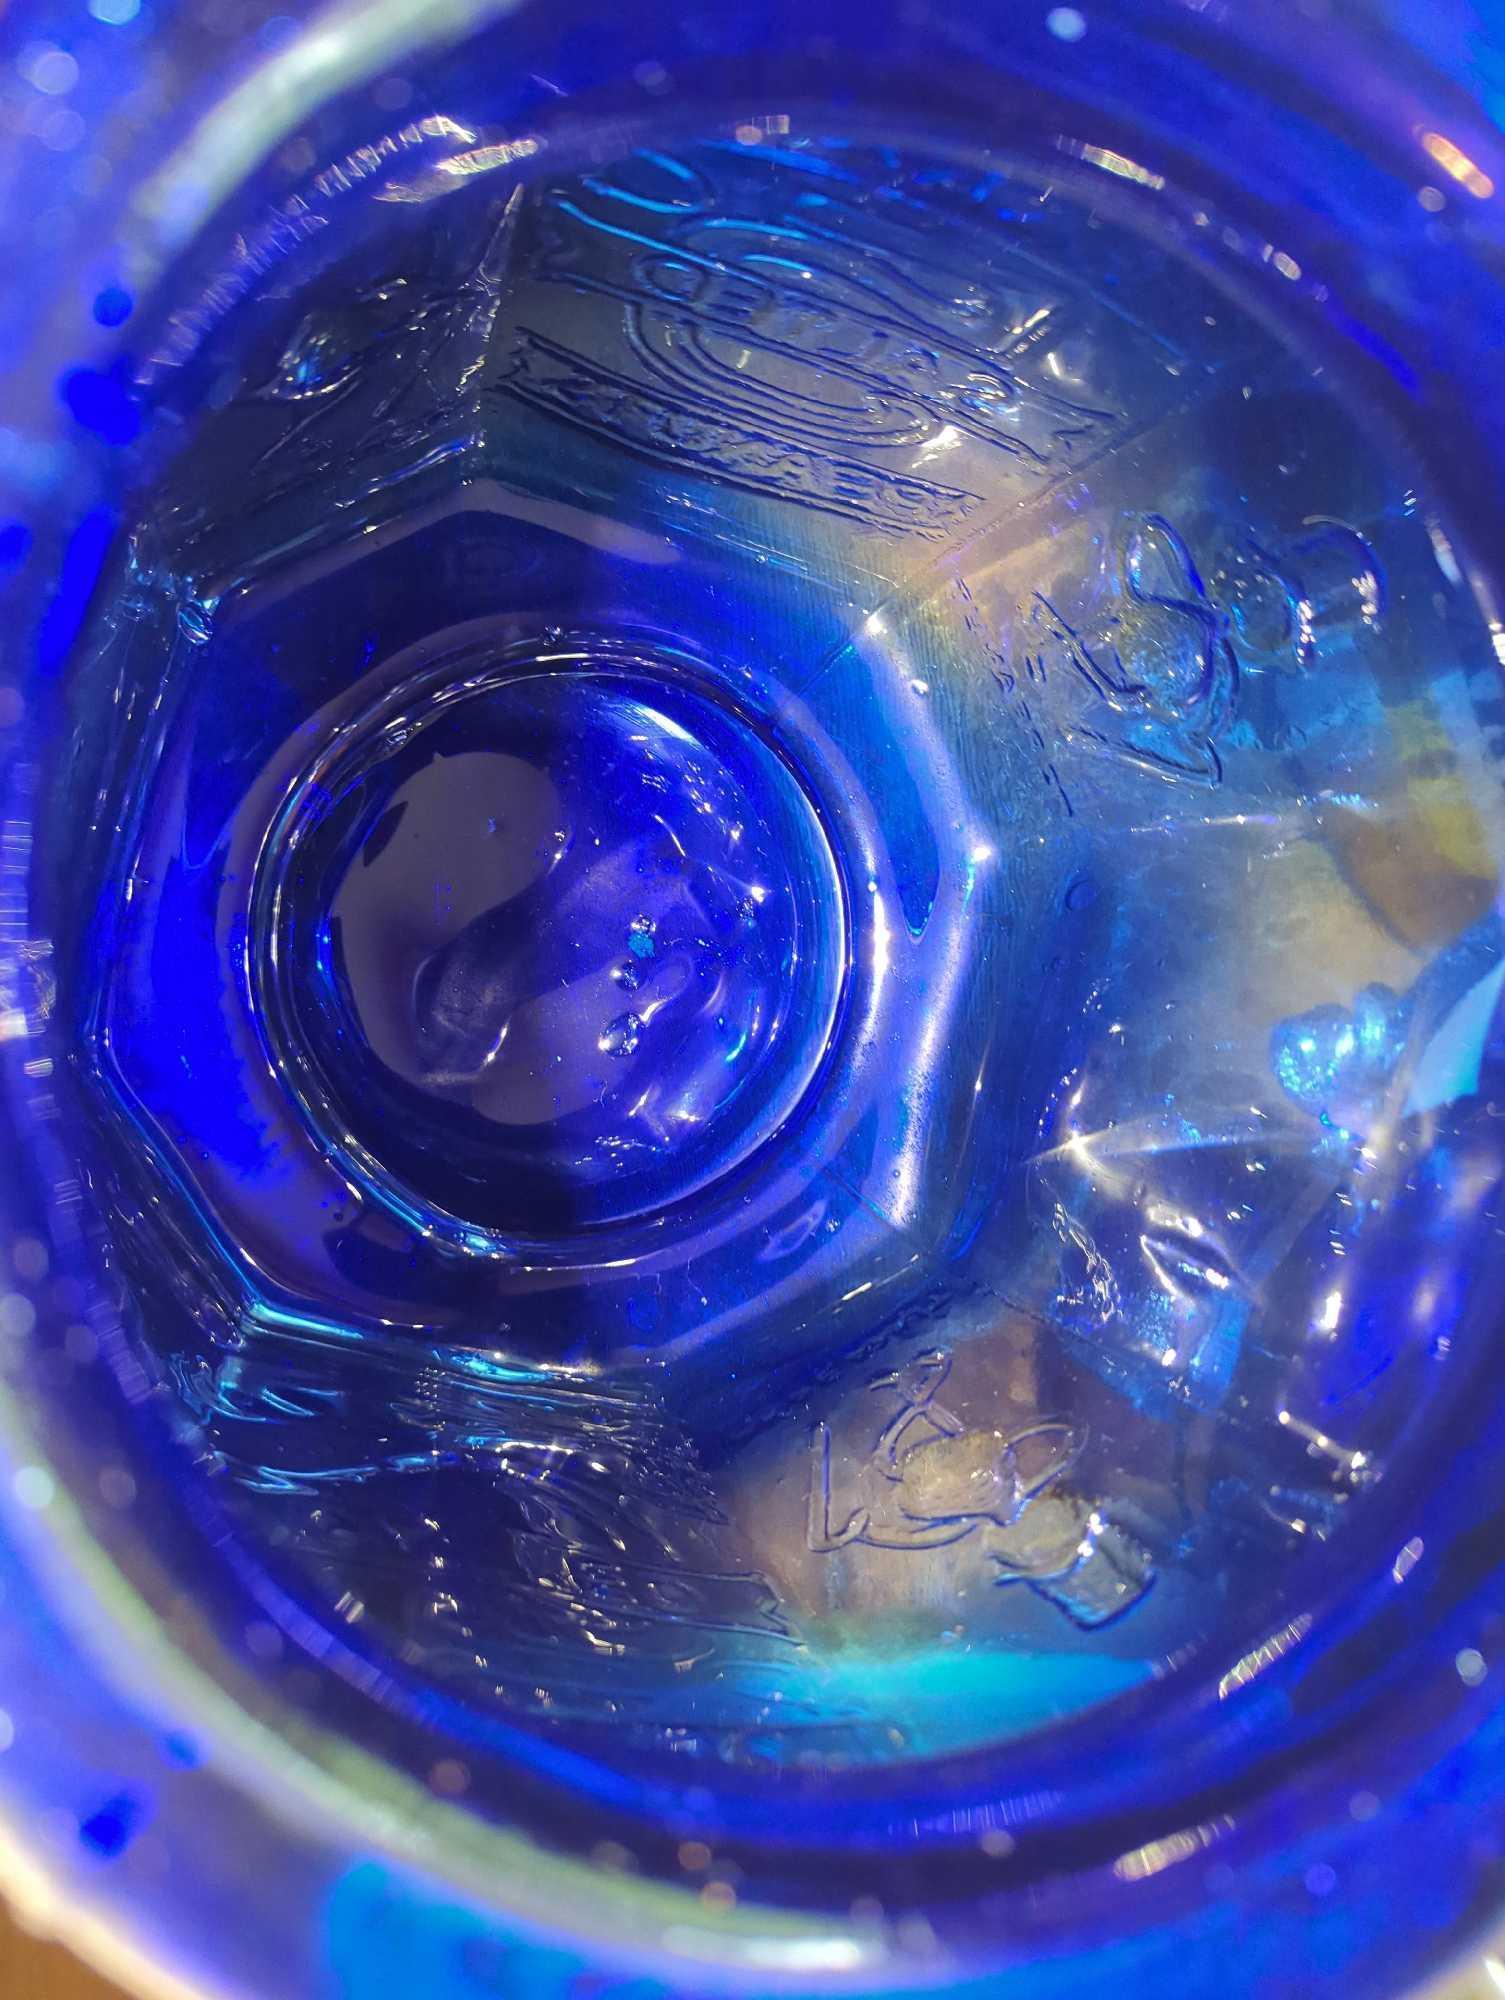 (DR) PLANTERS PENNANT "MR PEANUT" LARGE COBALT BLUE GLASS JAR WITH LID, APPROXIMATE DIMENSIONS - 13"